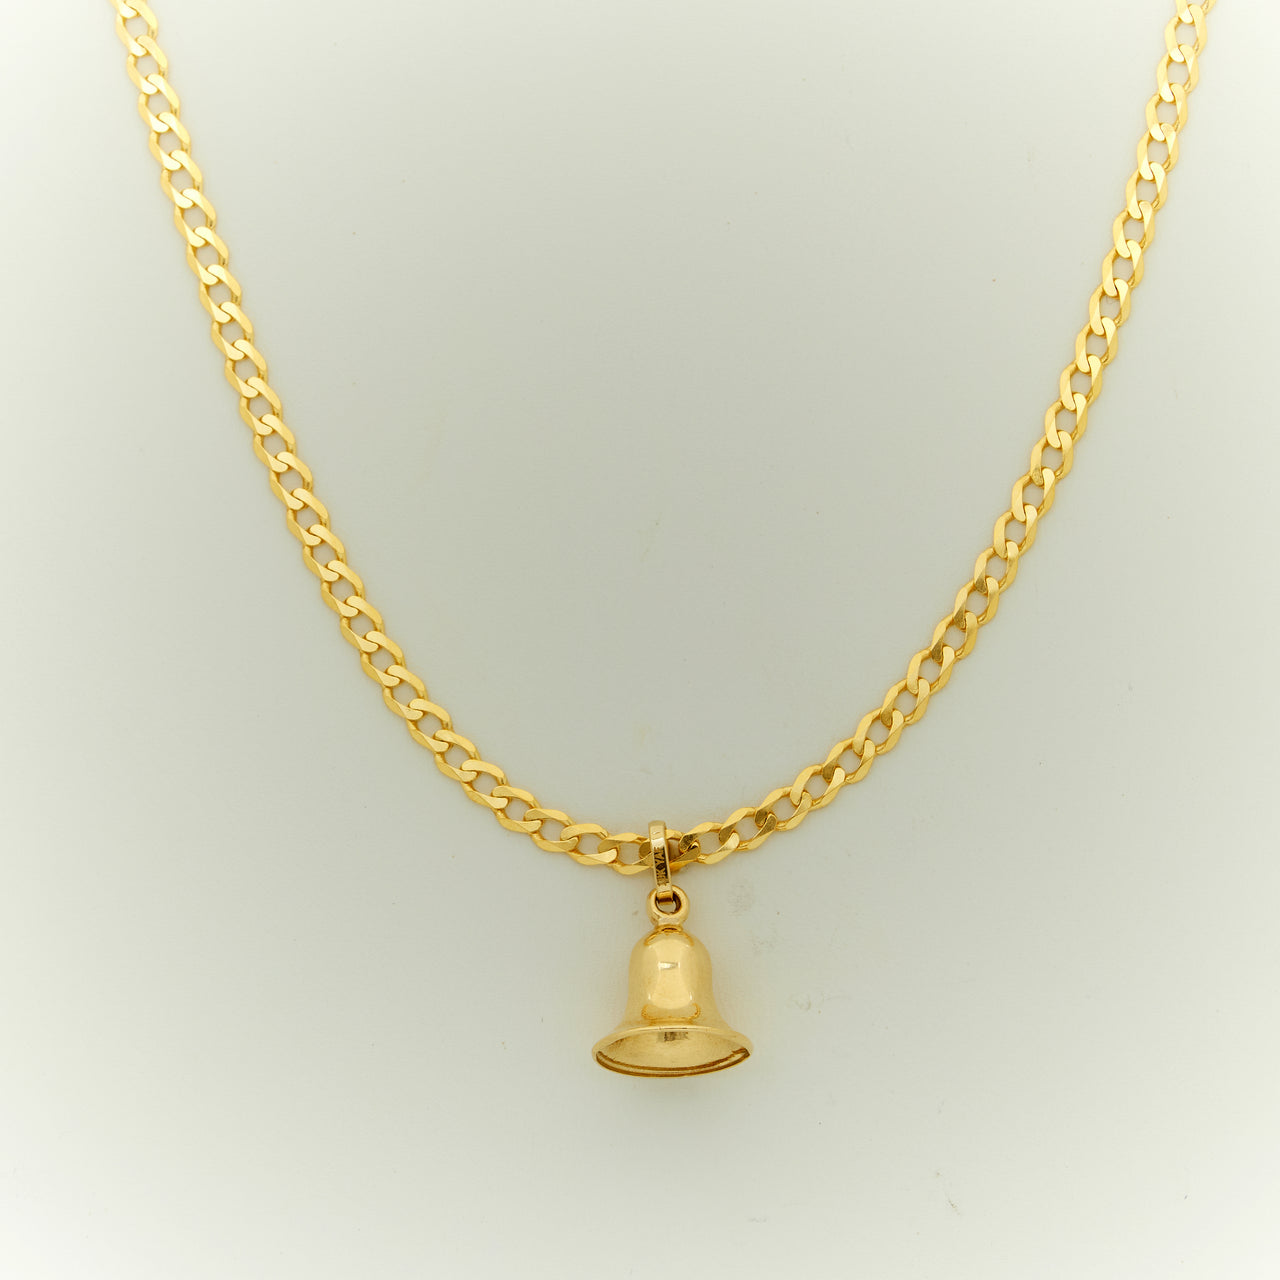 Cadenas de Oro 10k #4 para Mujer o Adolecentes. Acosta´s jewelry